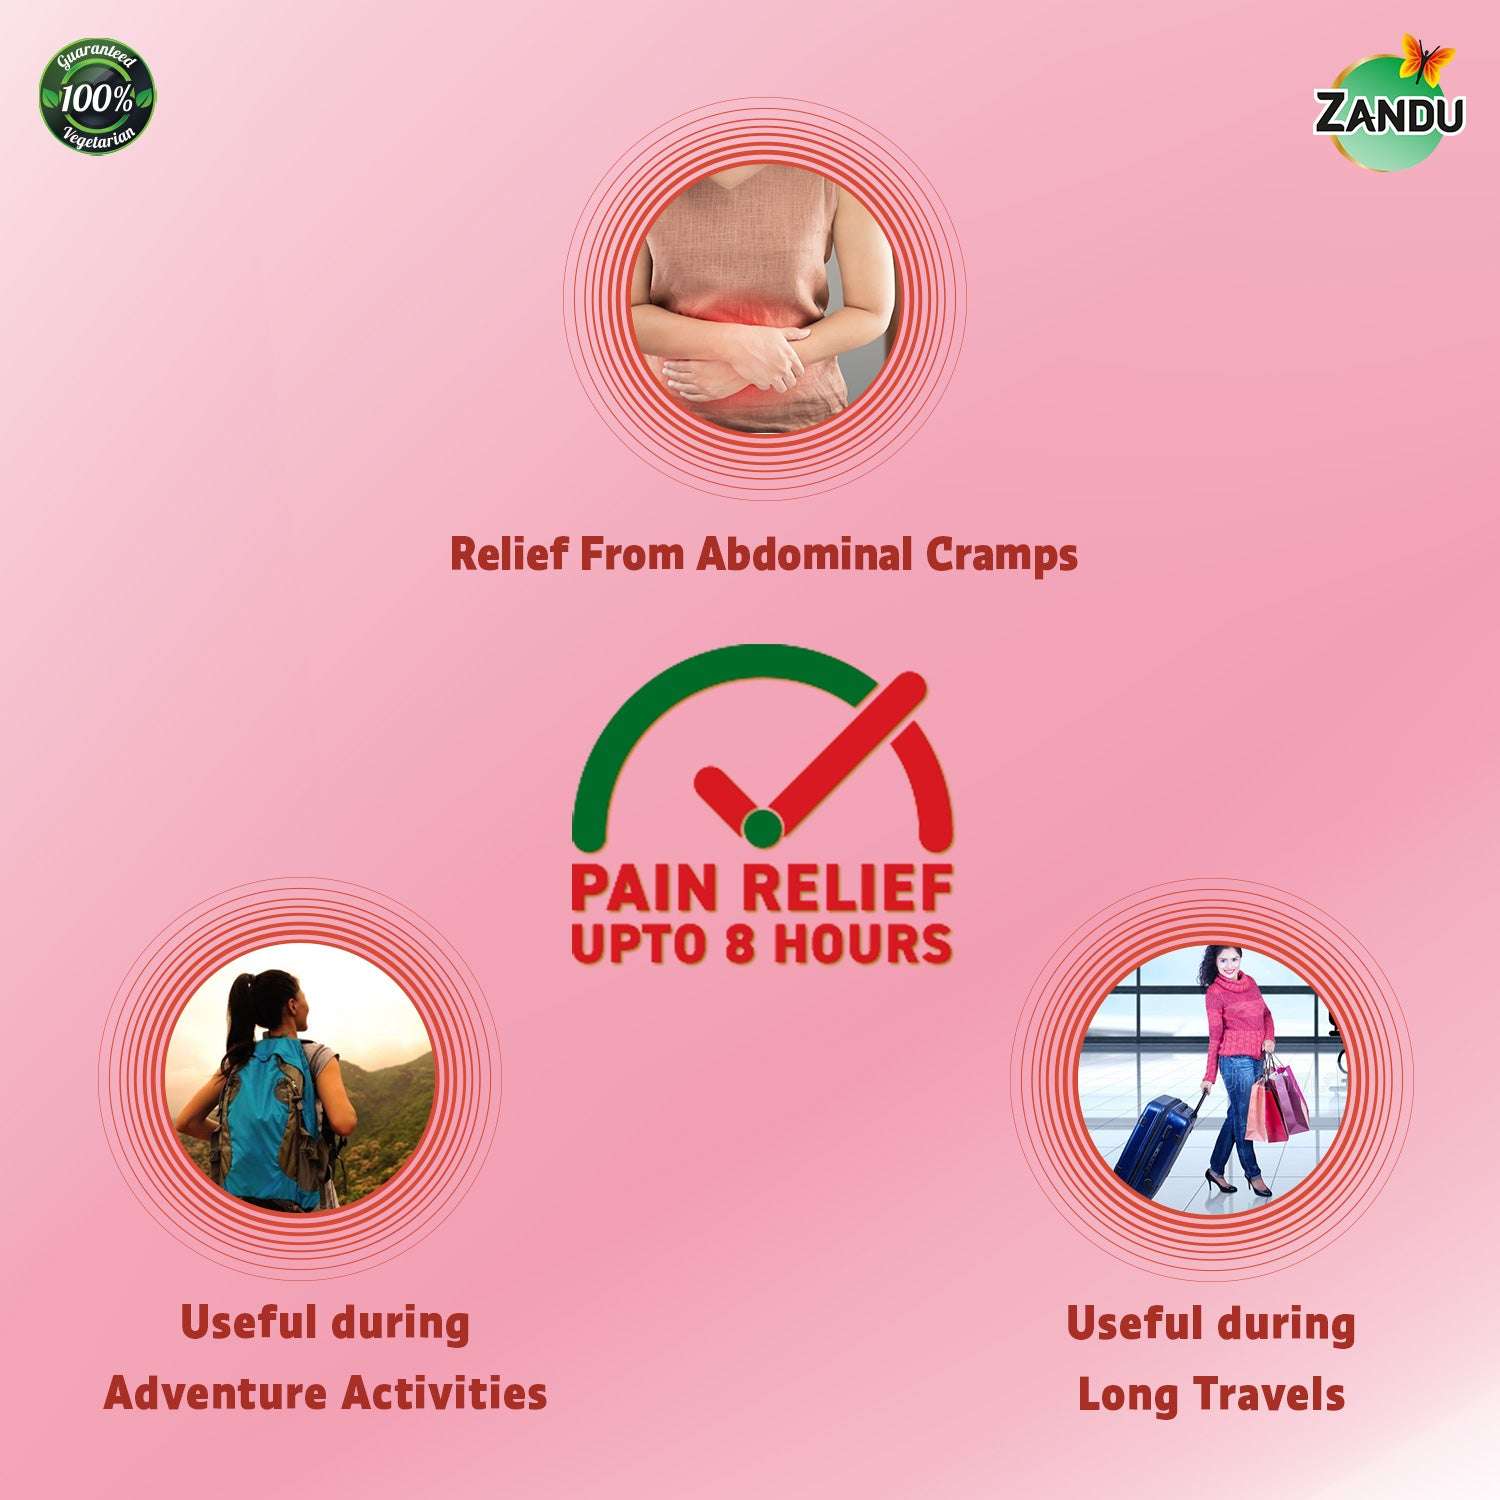 Zandu Periods Pain Relief Patch benefits